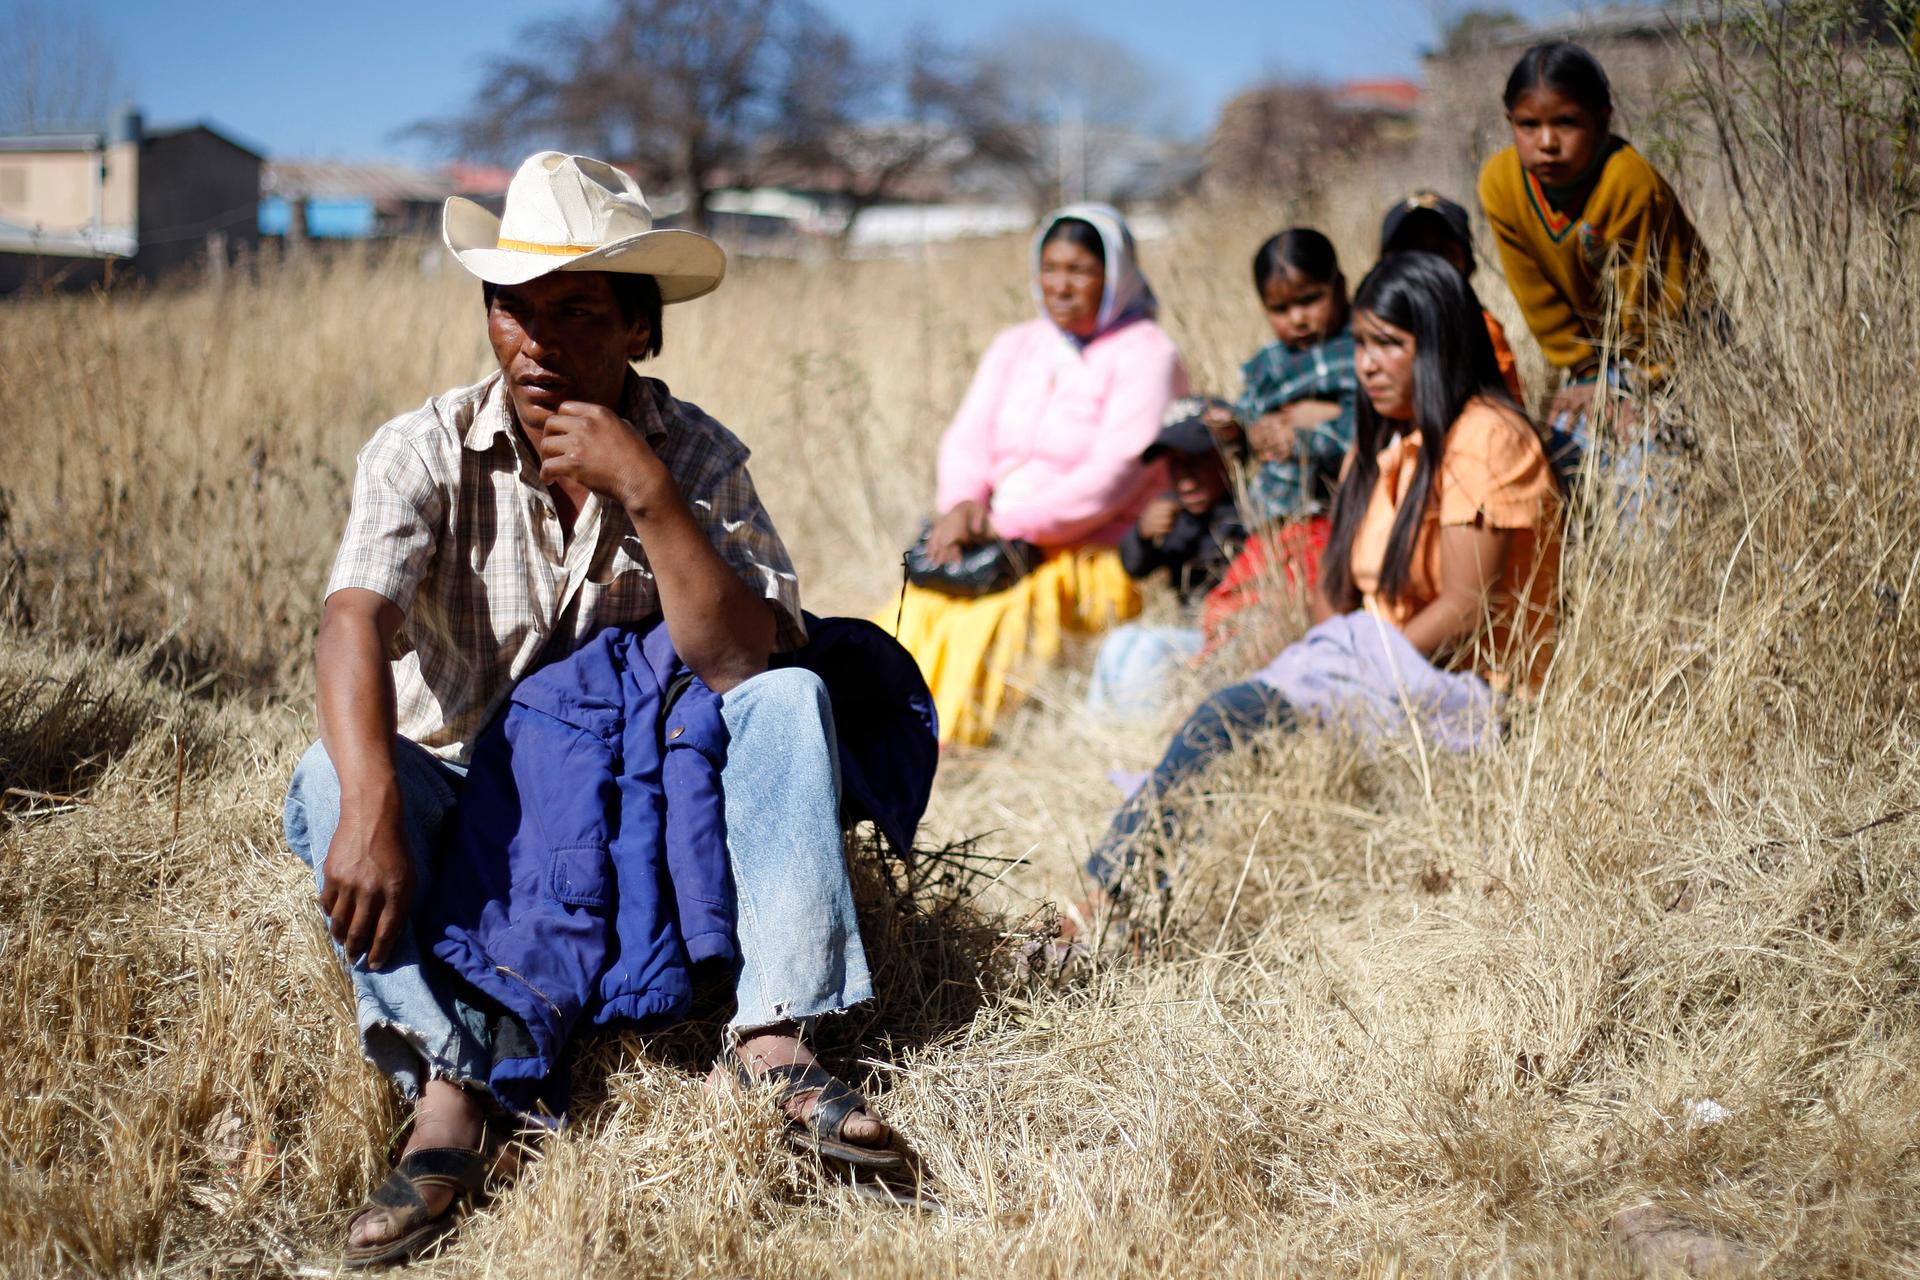 Tarahumara Indigenous family sits together in Guachochi November 30, 2011.